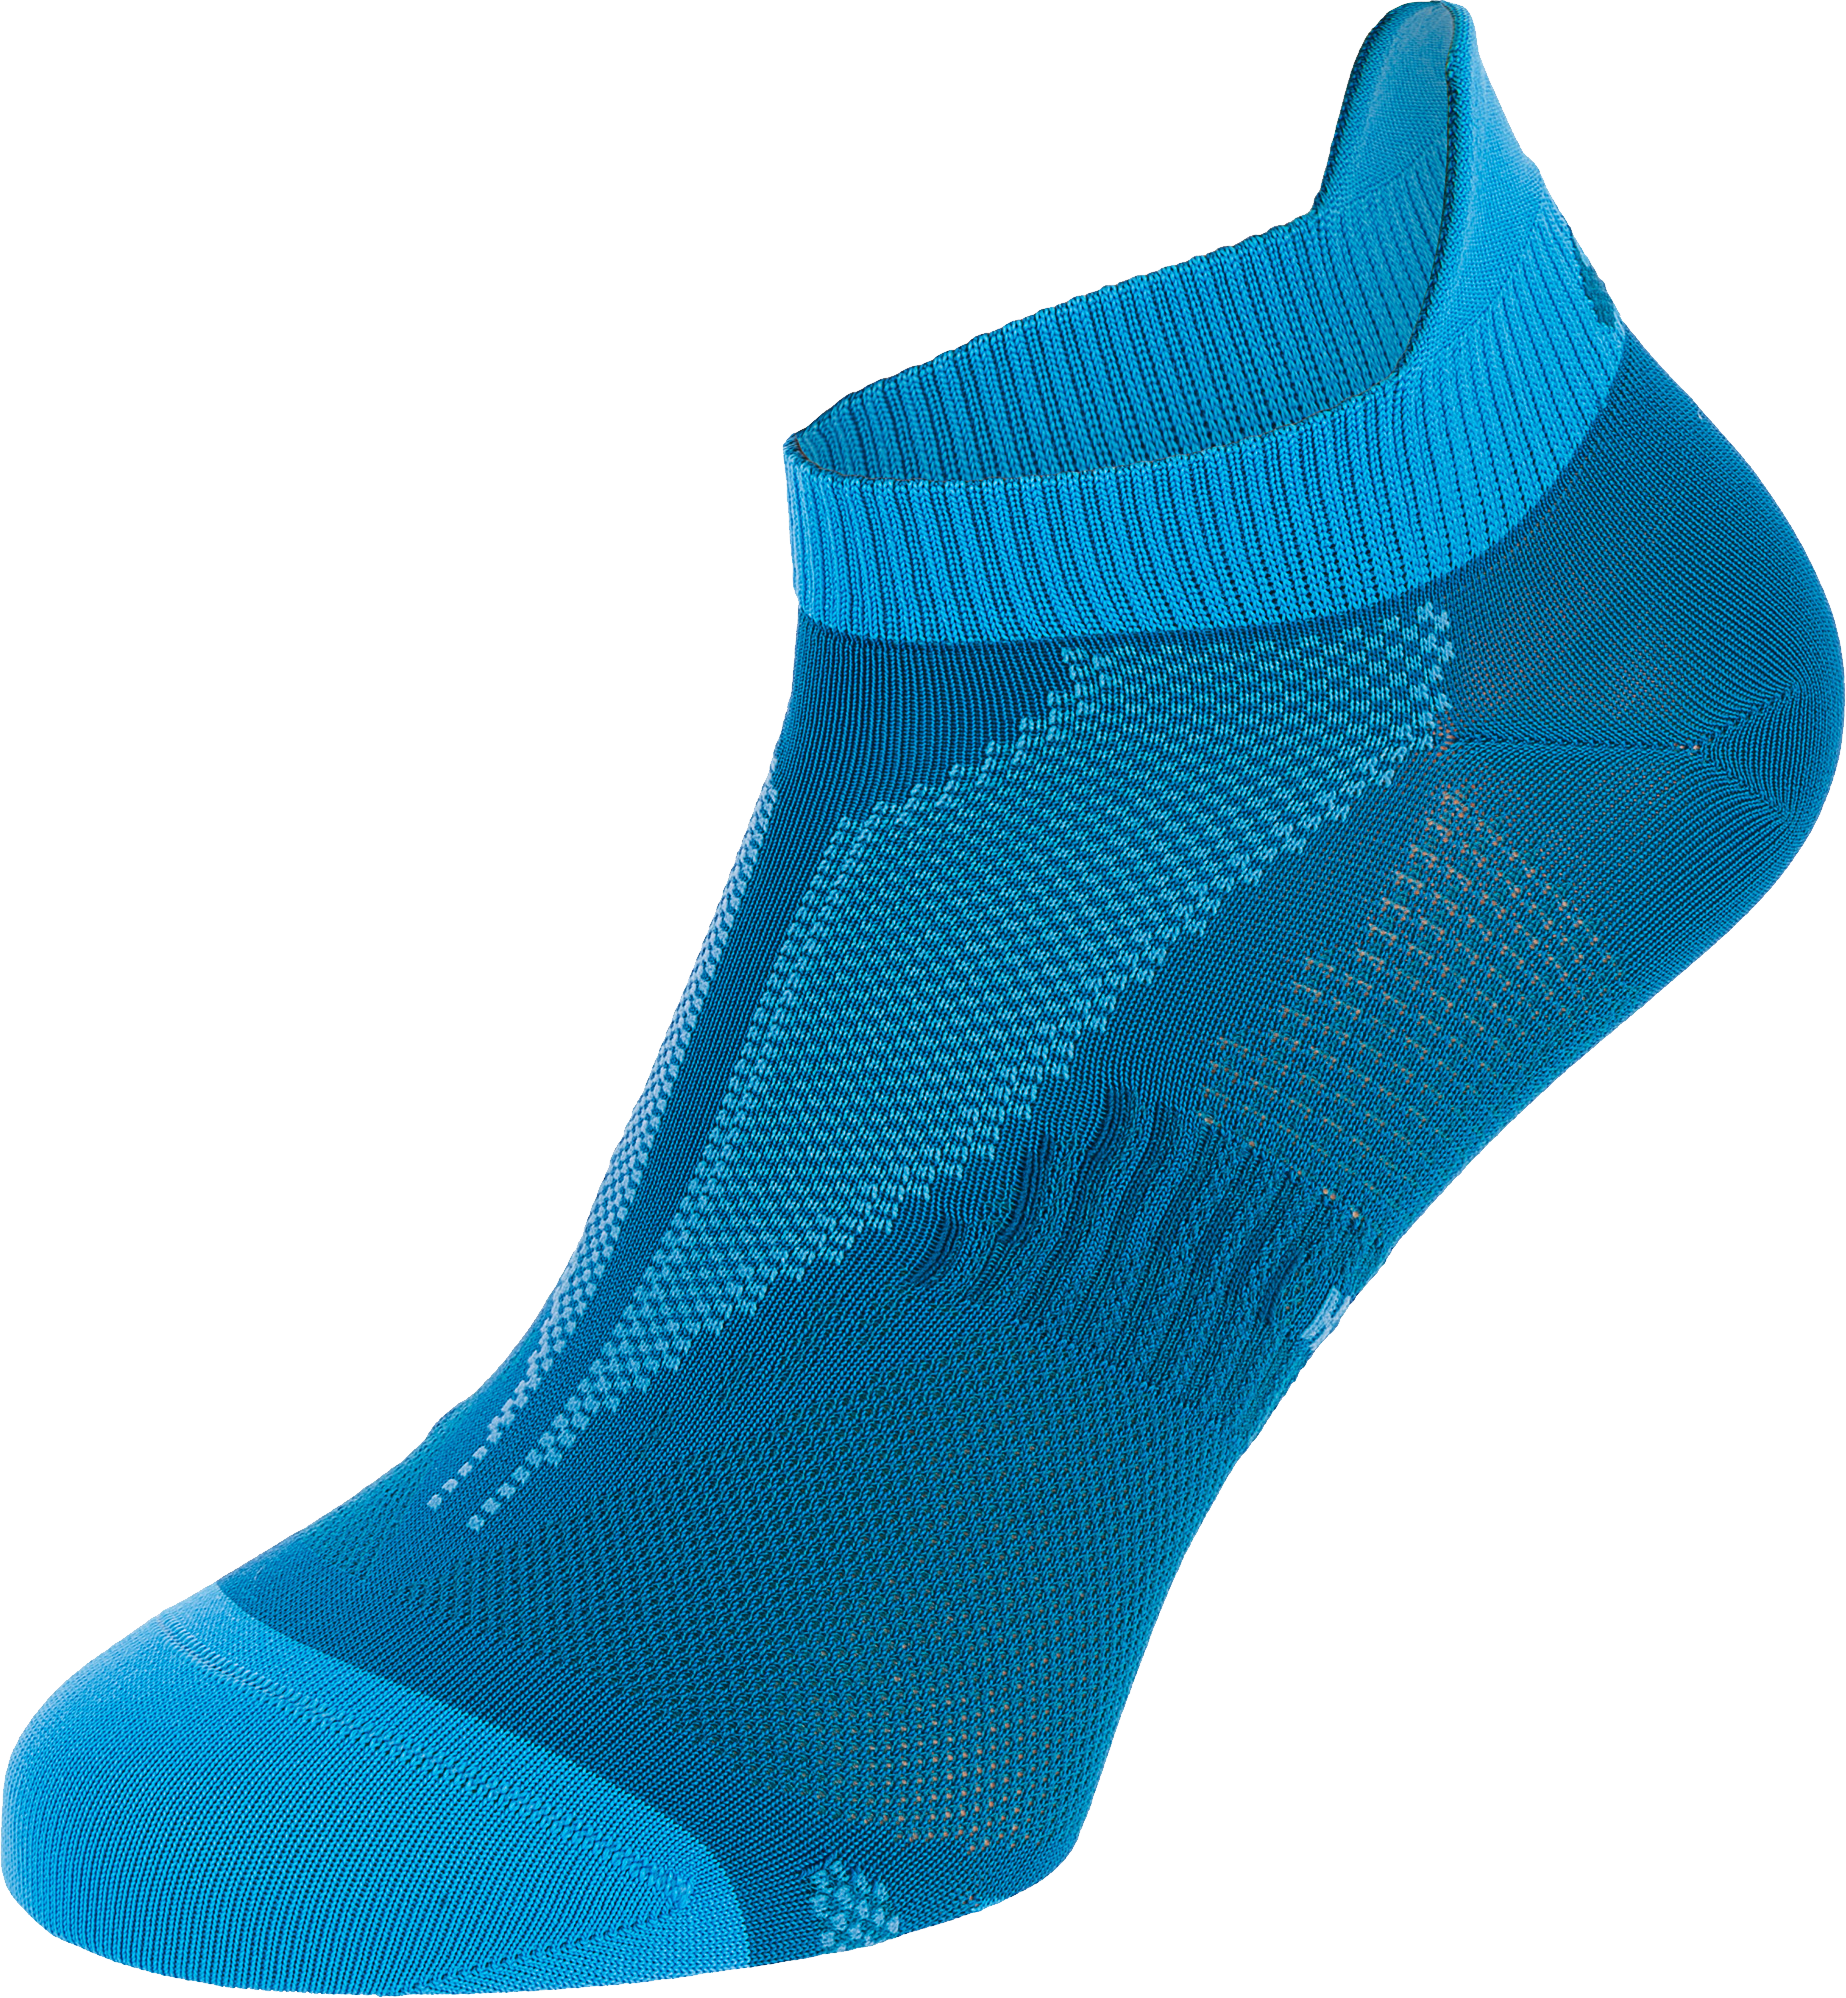 A Blue Sock On A Black Background